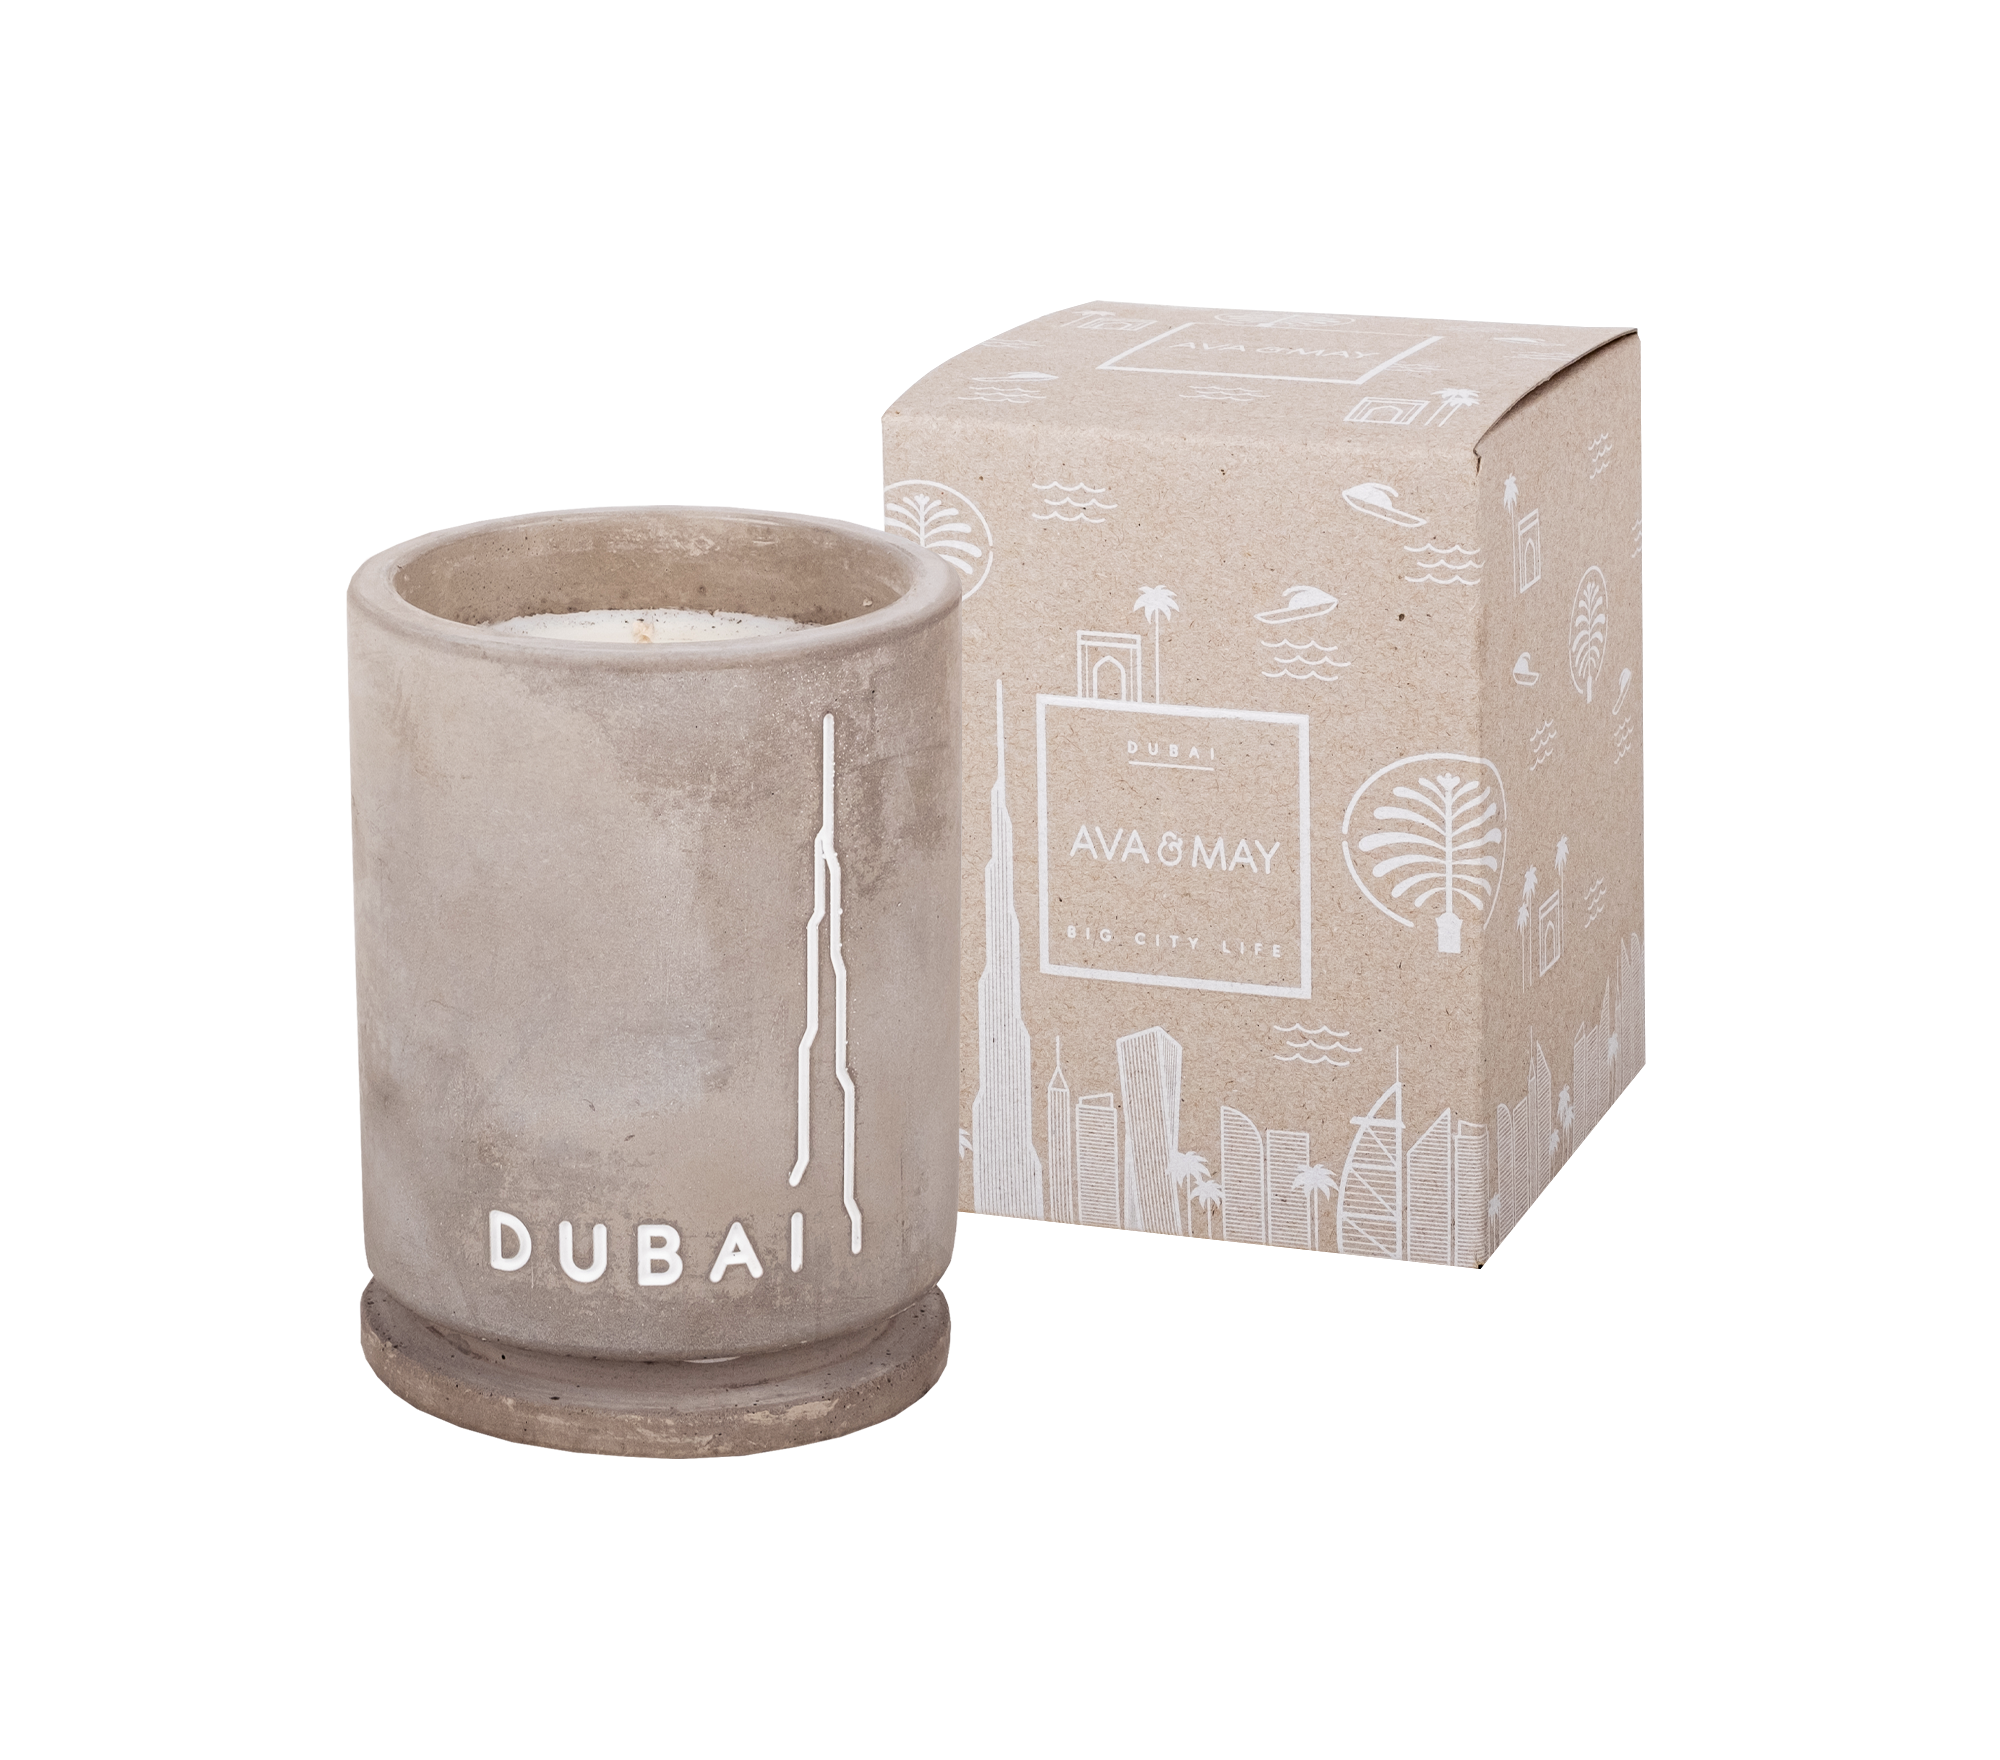 Dubai Duftkerze